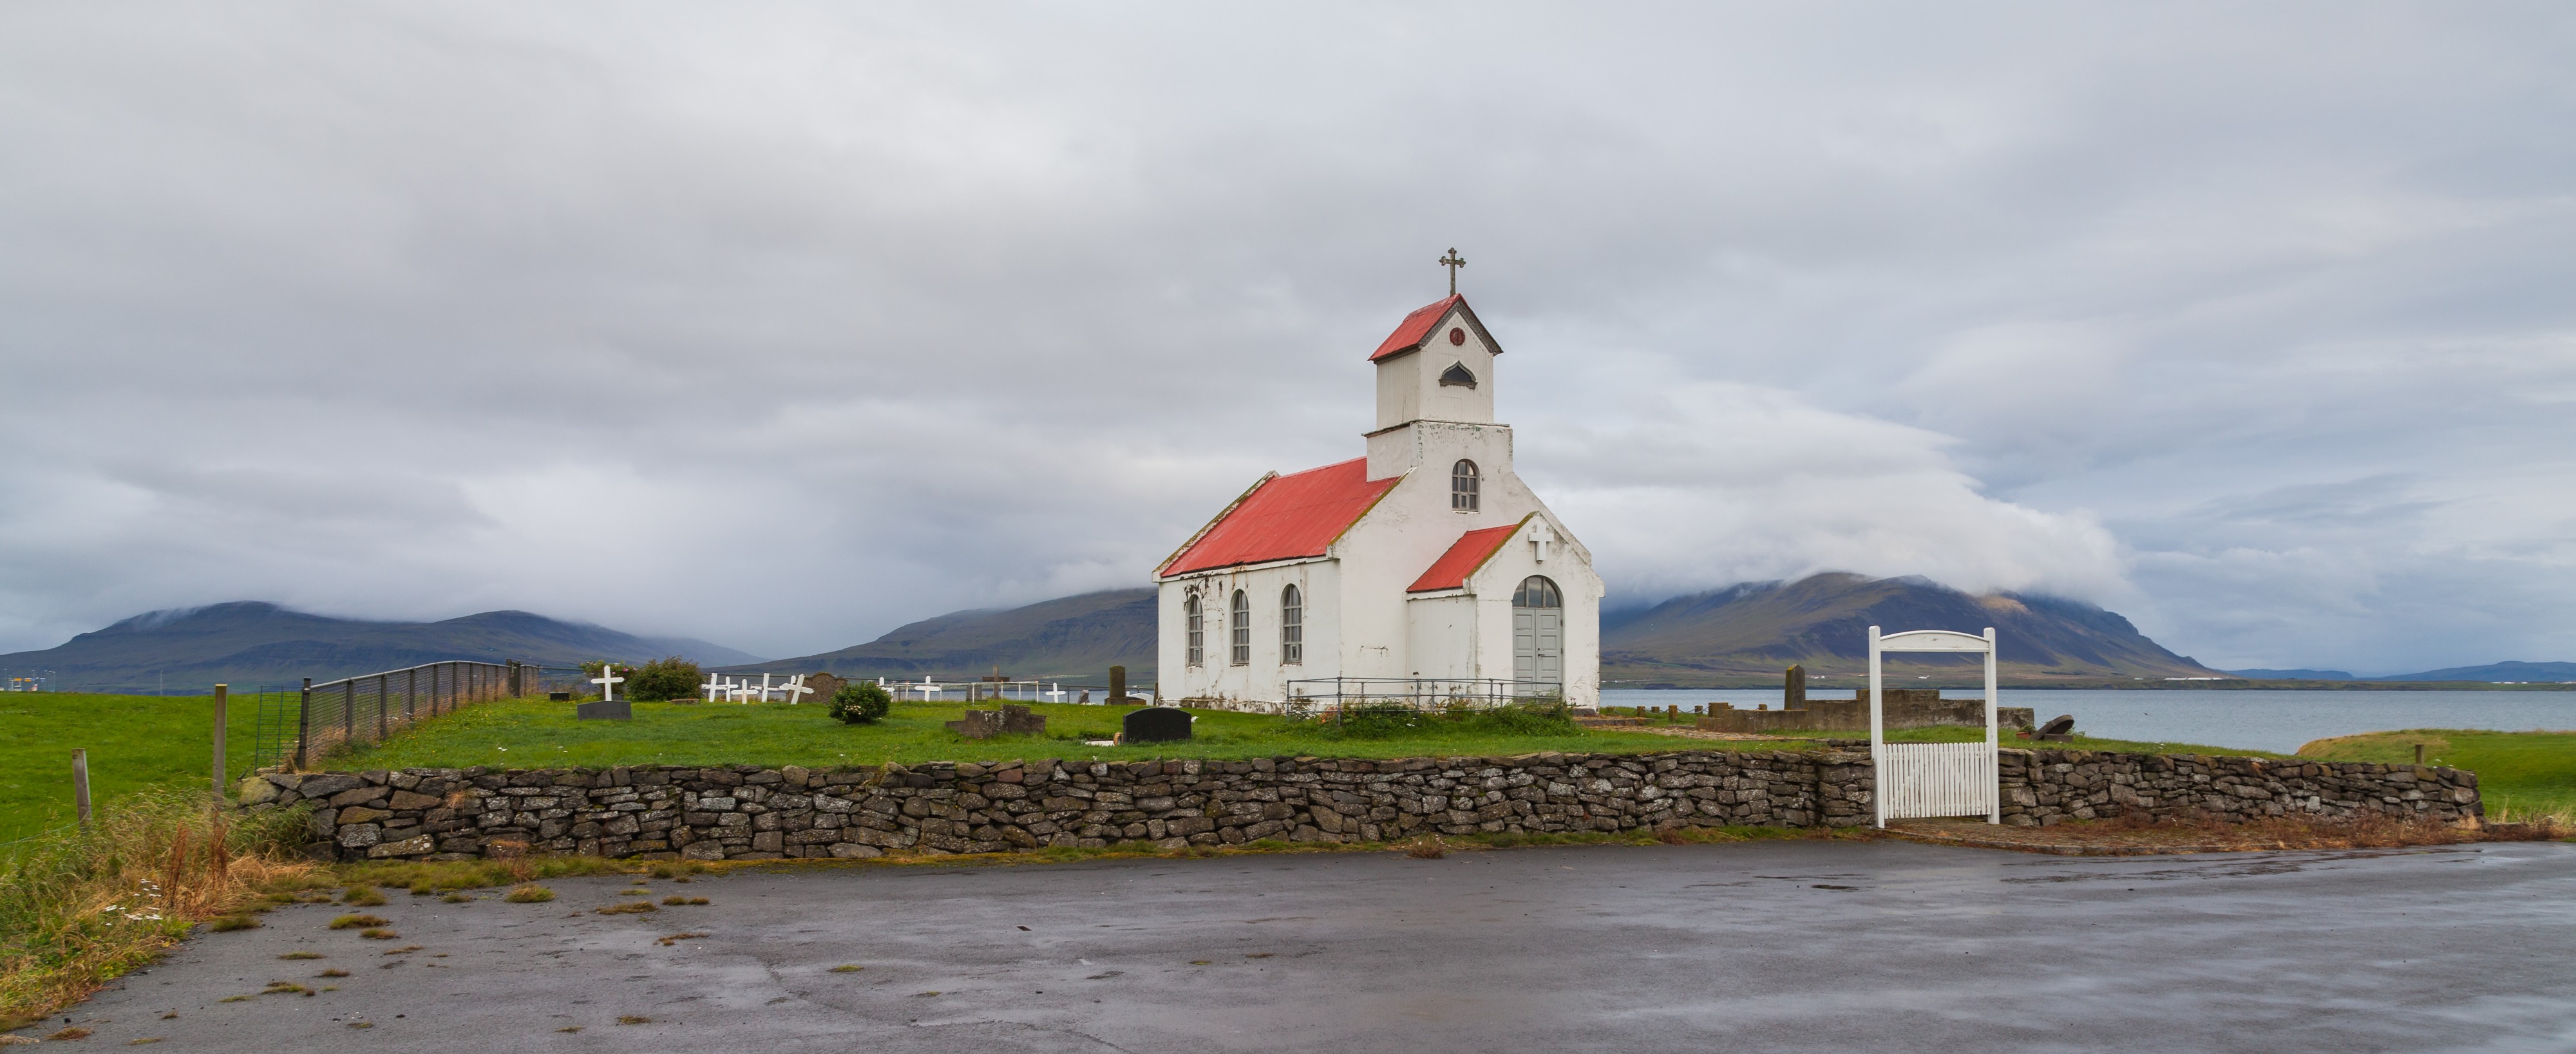 Iglesia, Innri-Hólmur, Vesturland, Islandia, 2014-08-15, DD 105